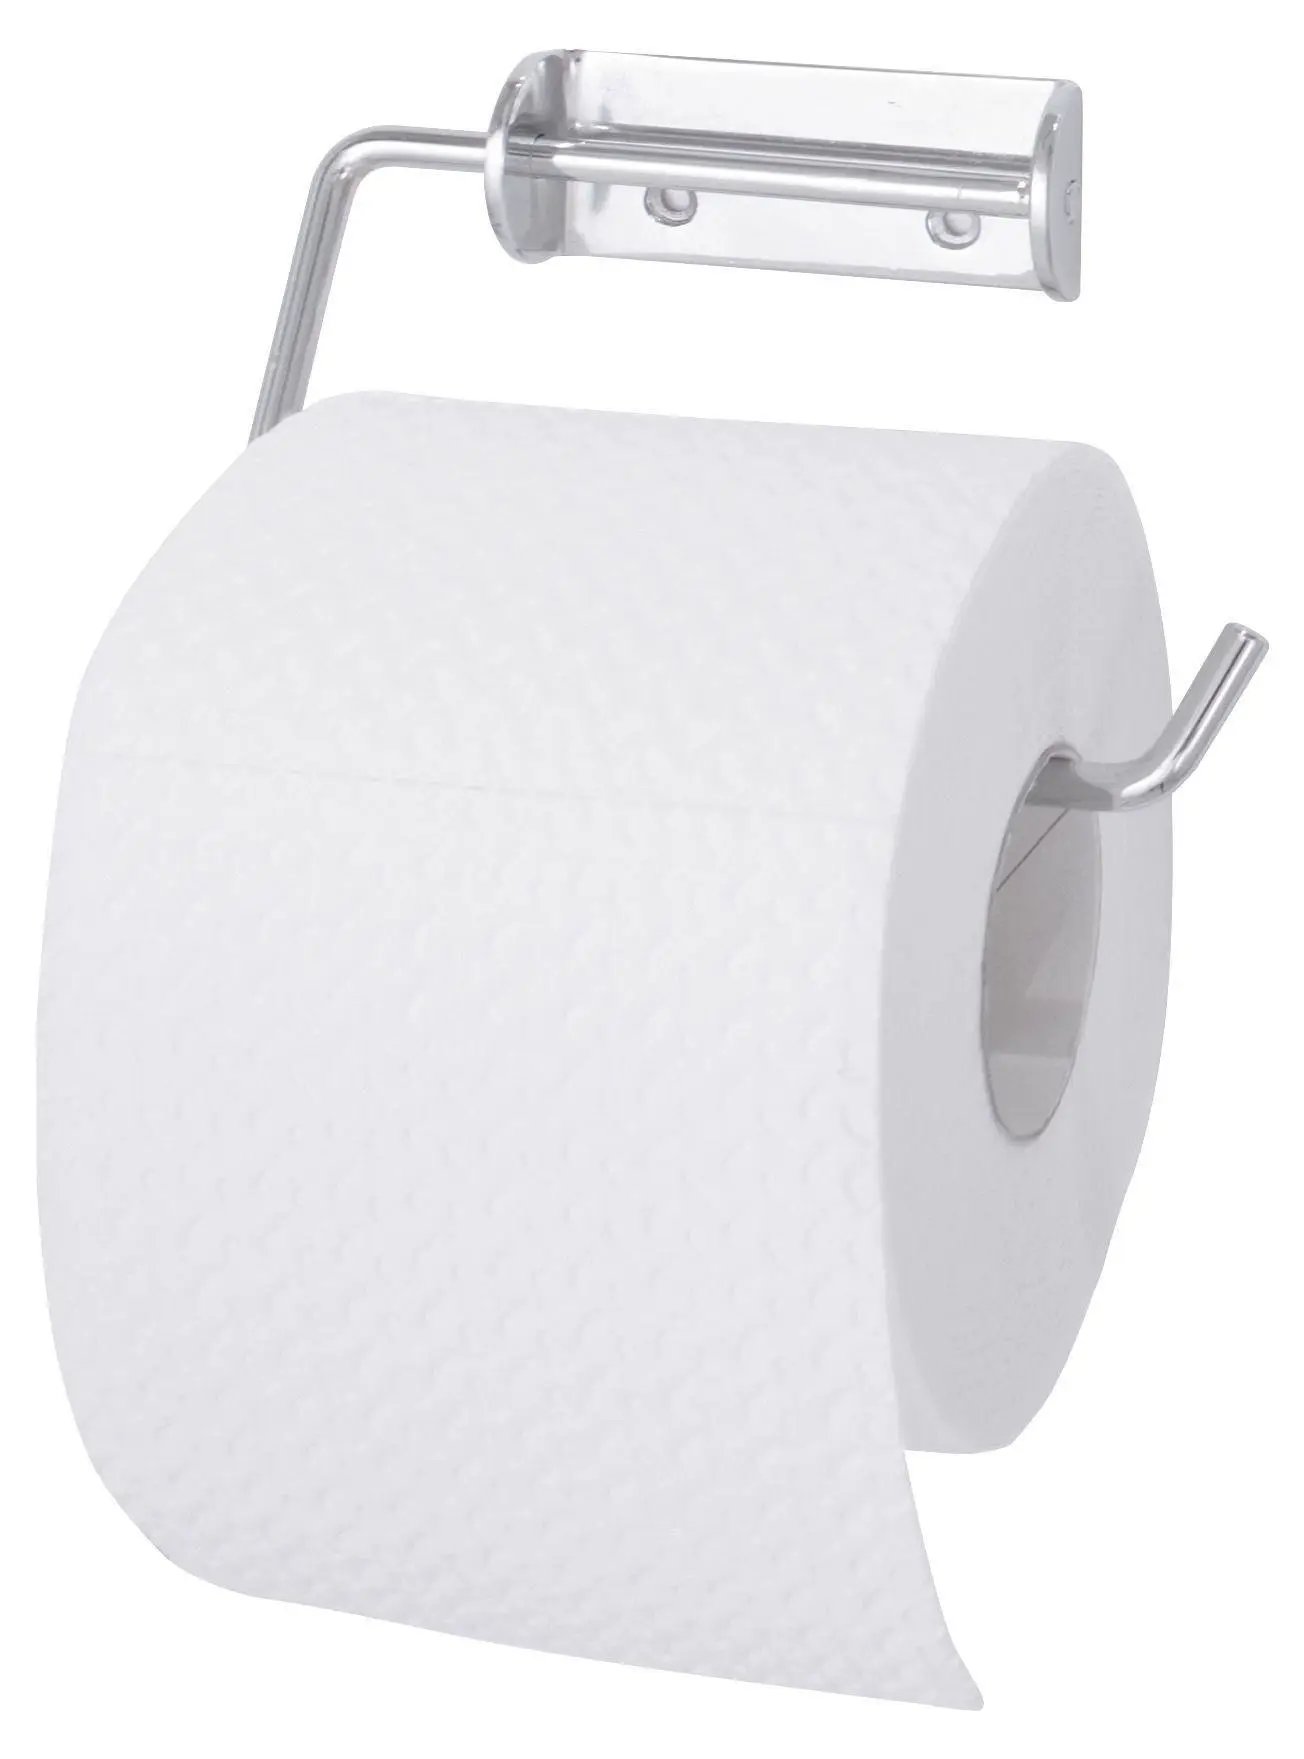 Toilettenpapierhalter SIMPLE, silber